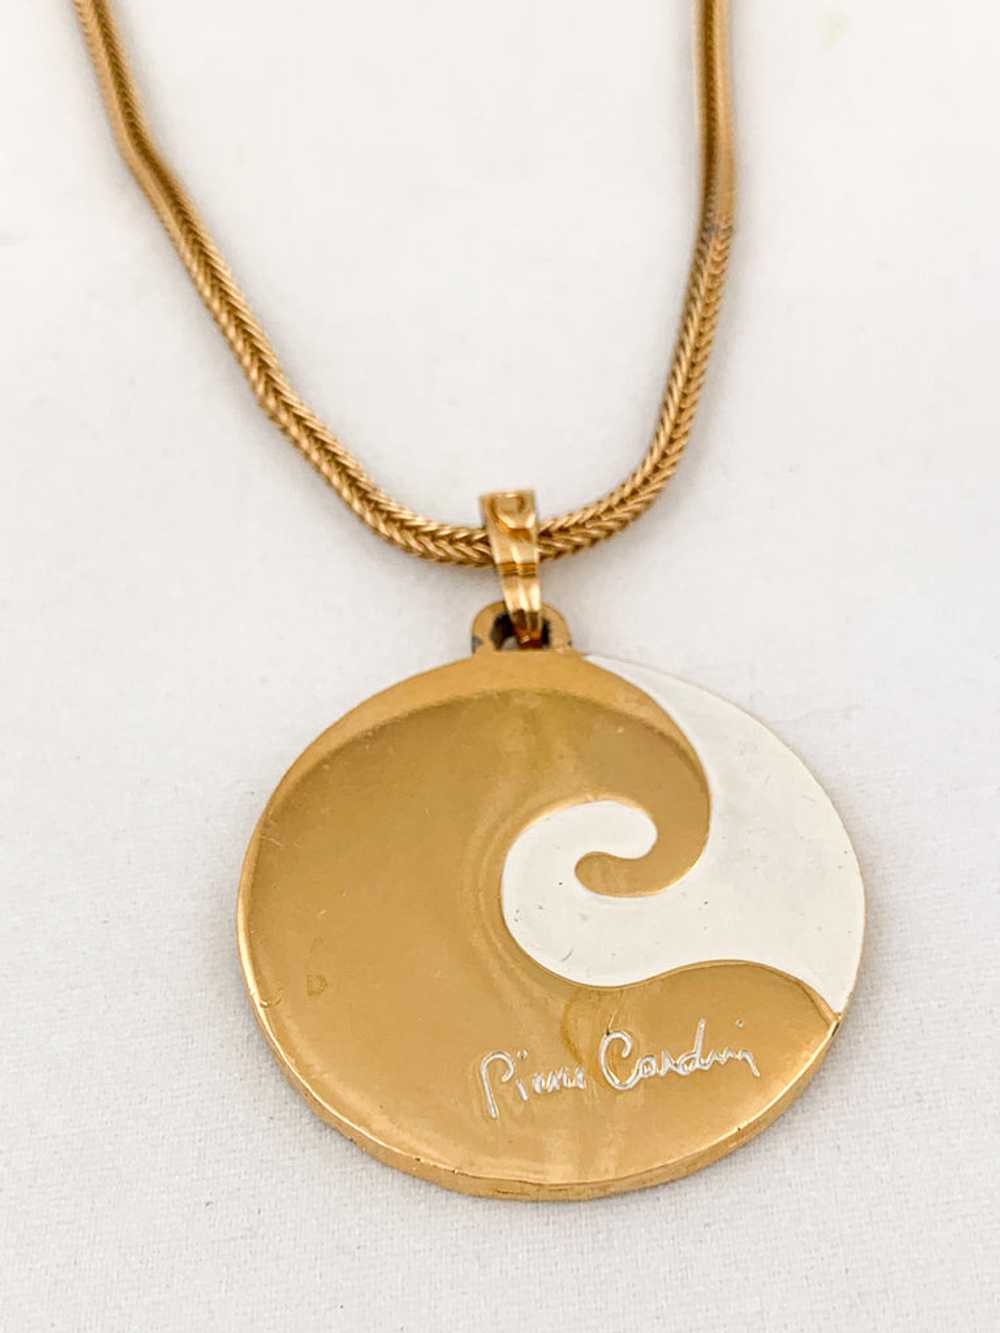 Pierre Cardin Gold Swirl Necklace - image 2